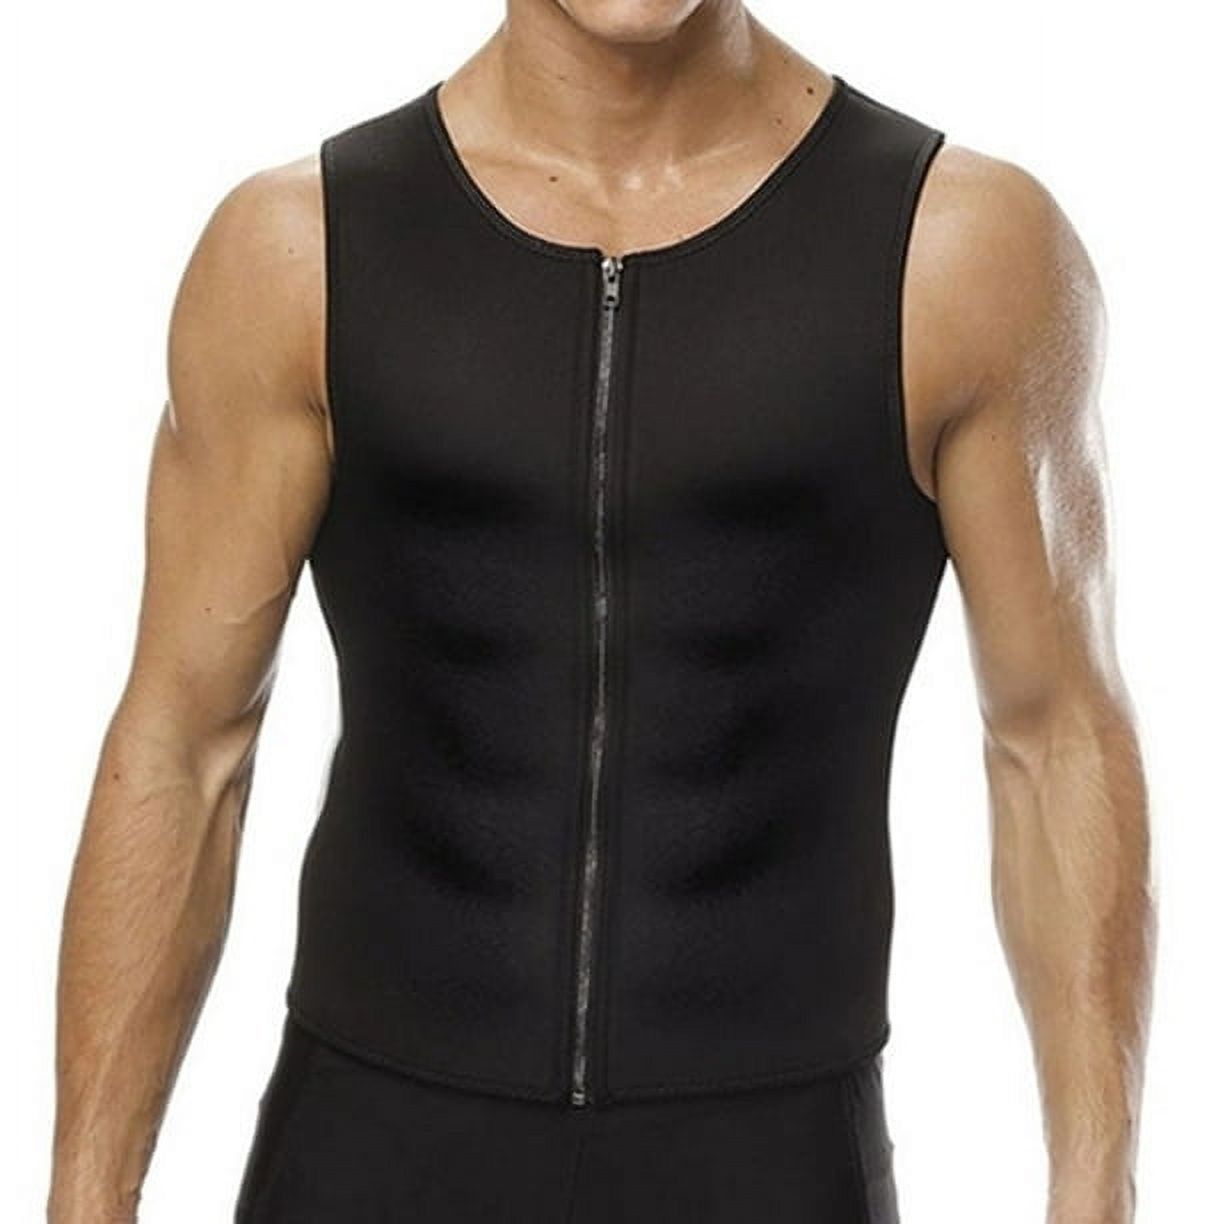 Mens Compression Shirt Slimming Body Shaper Vest Waist Trainer Workout ...